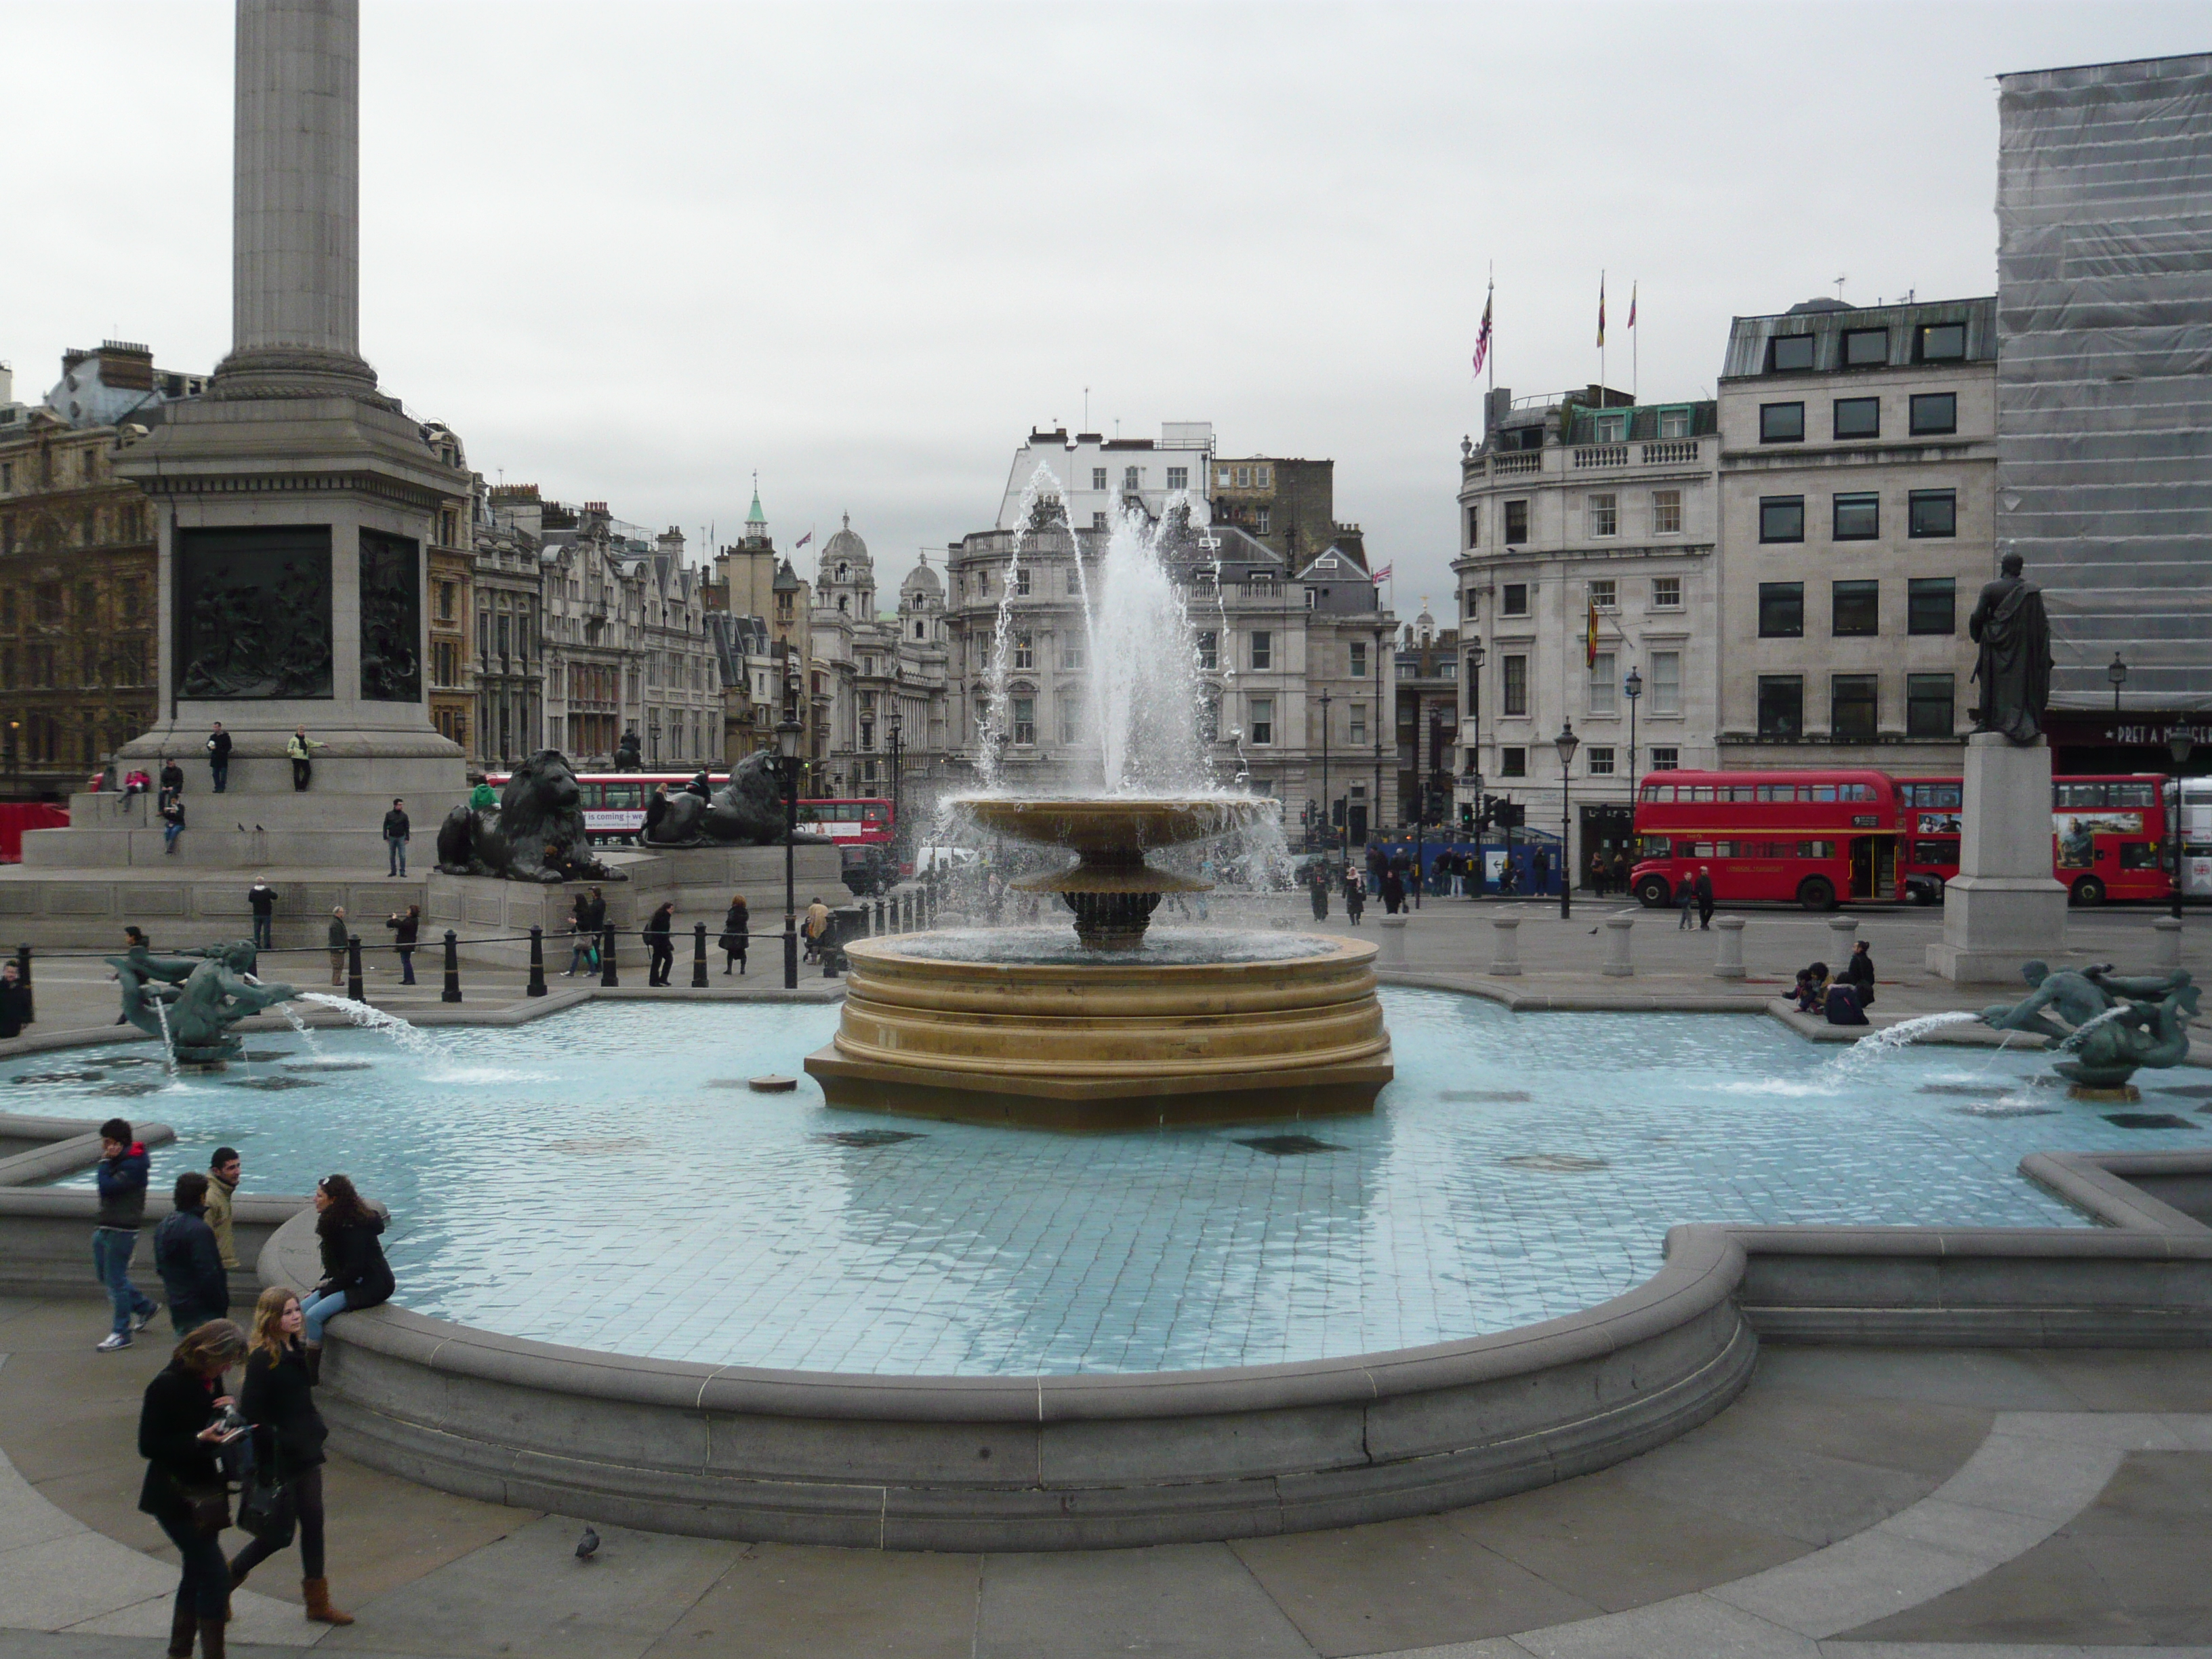 Trafalgar square fountain, red buss, people, grey day.